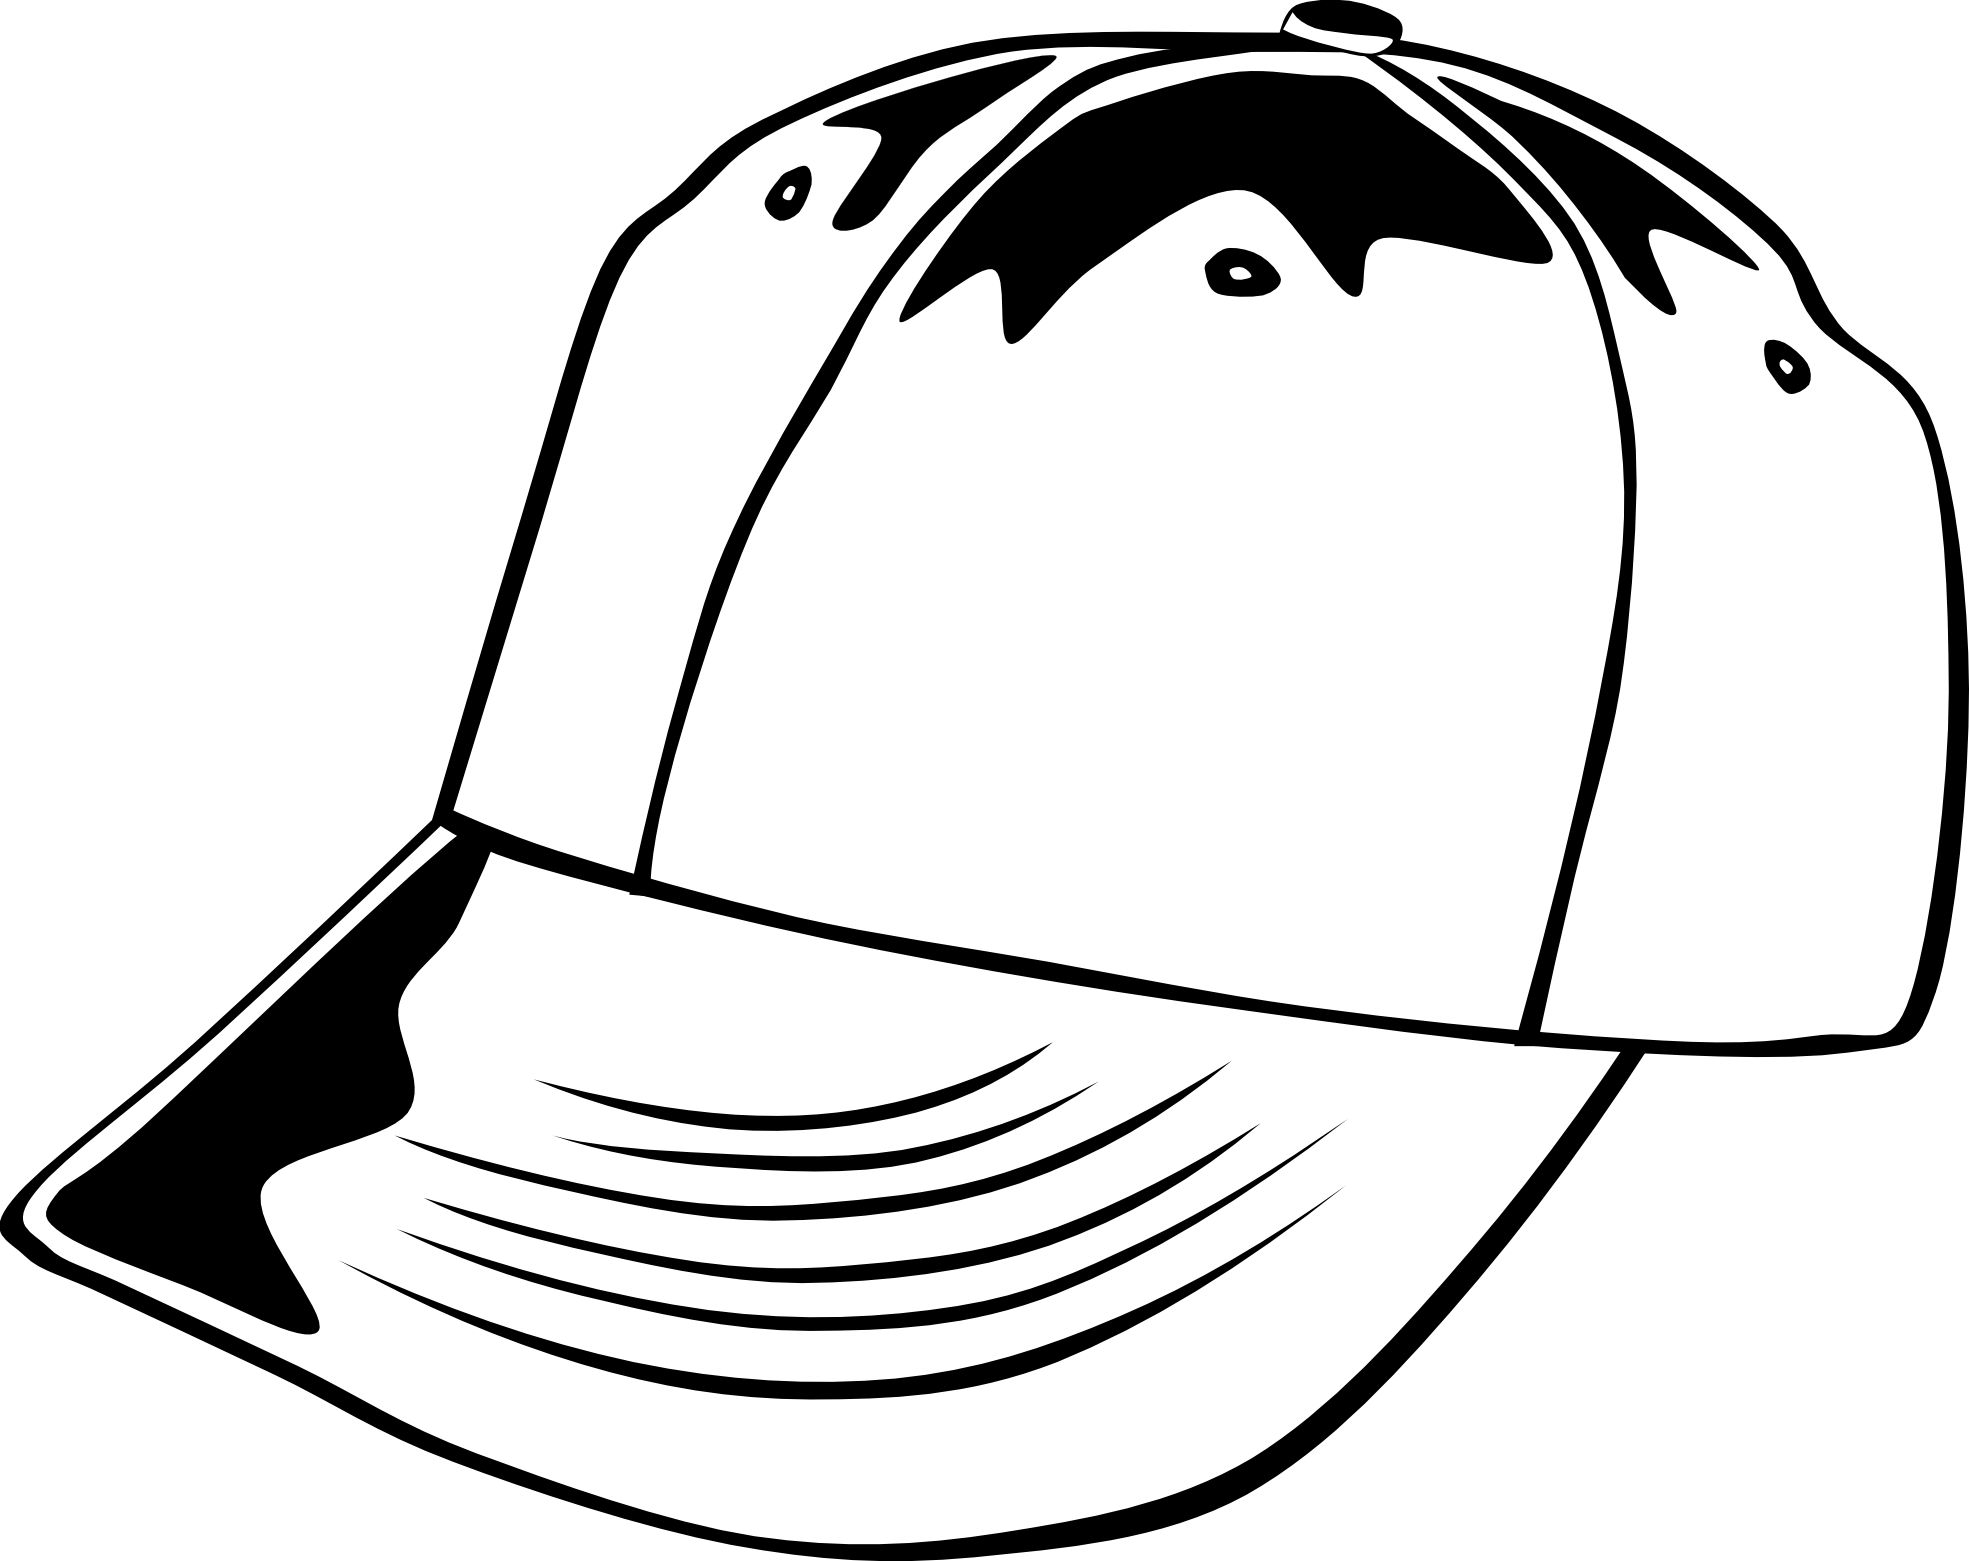 Baseball hat baseball cap image free download clip art